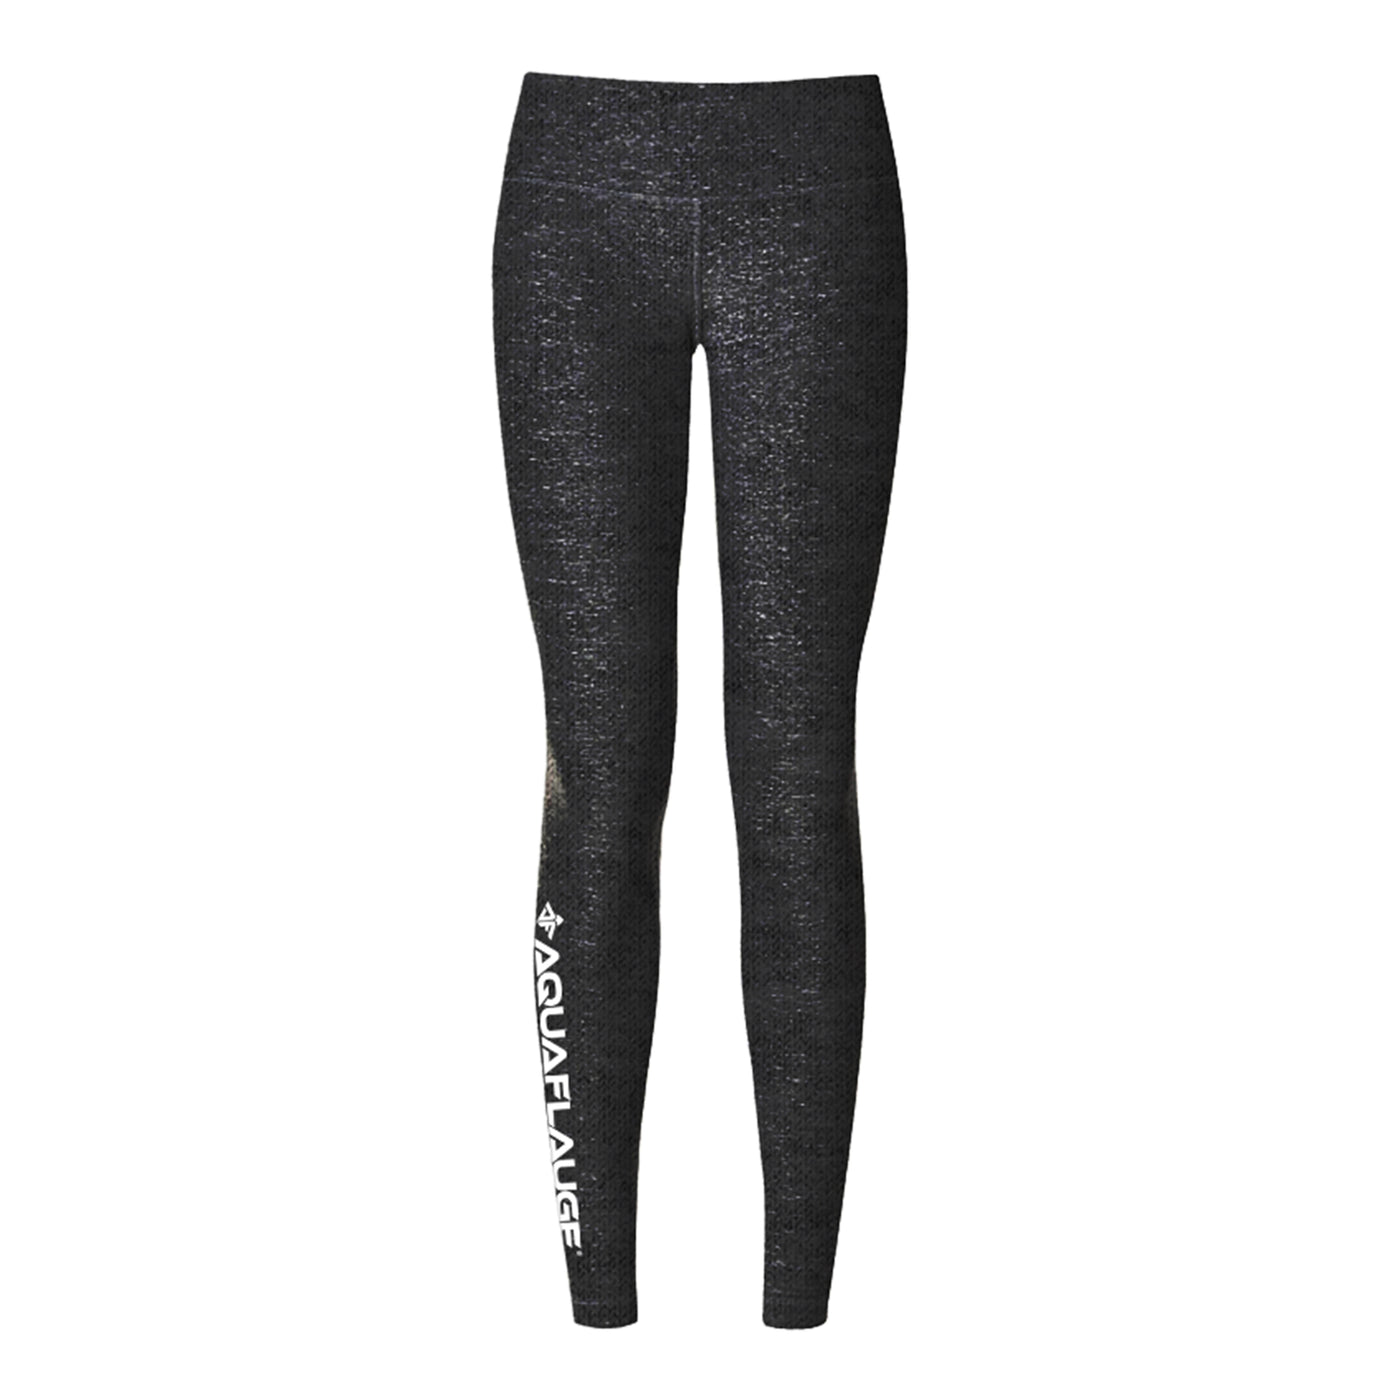 Black Heathered Yoga Pants - Women's